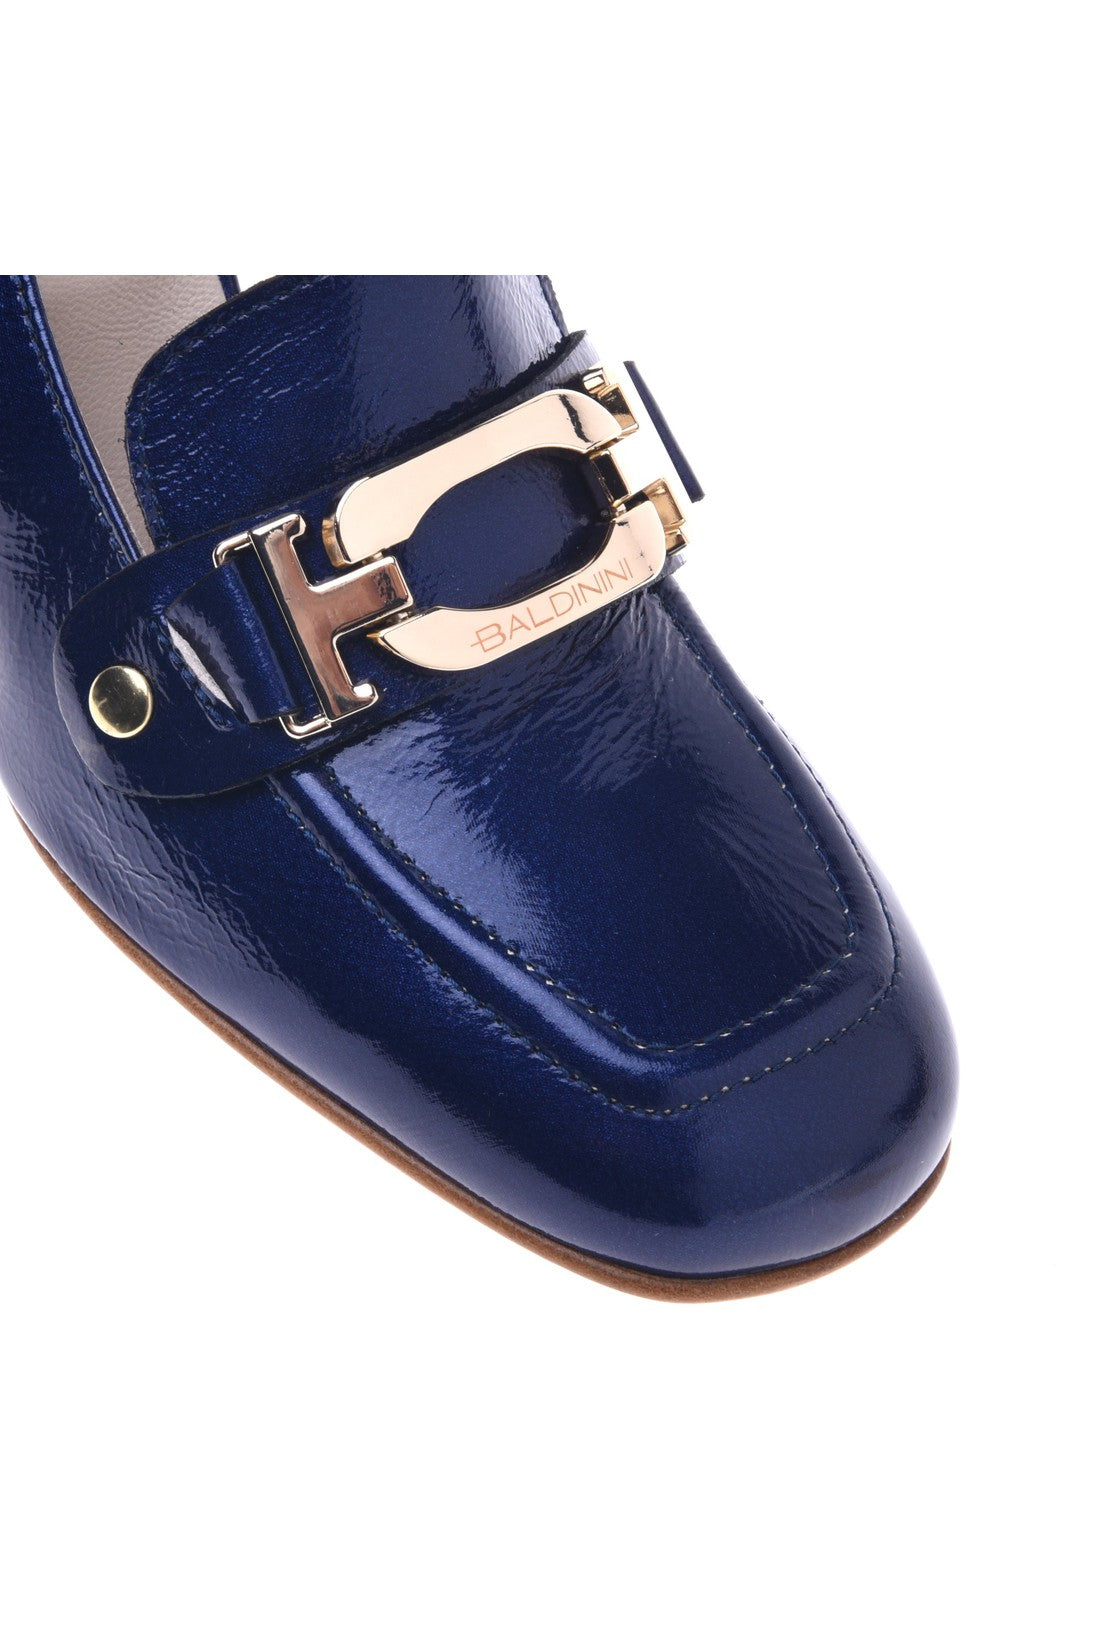 Loafer in blue naplak leather